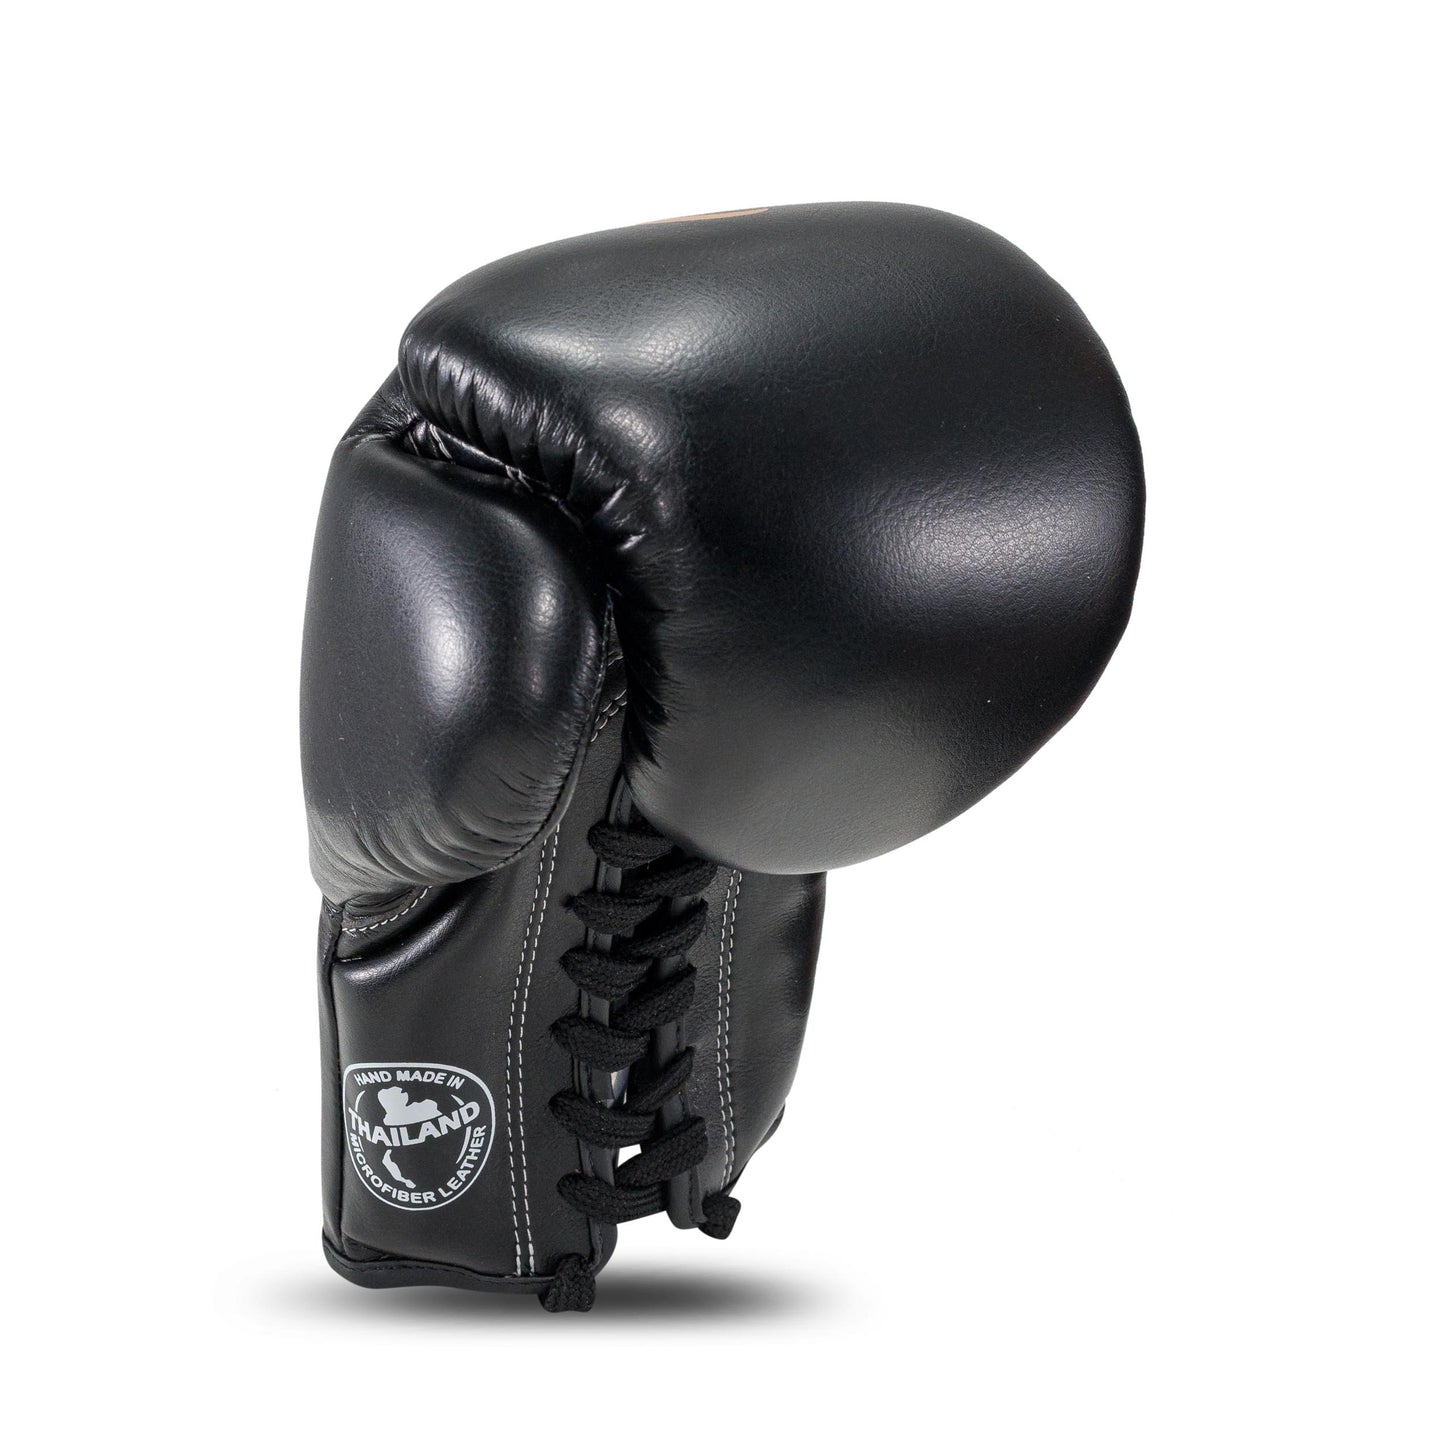 Blegend Boxing Gloves Lace Up Upstyle Black